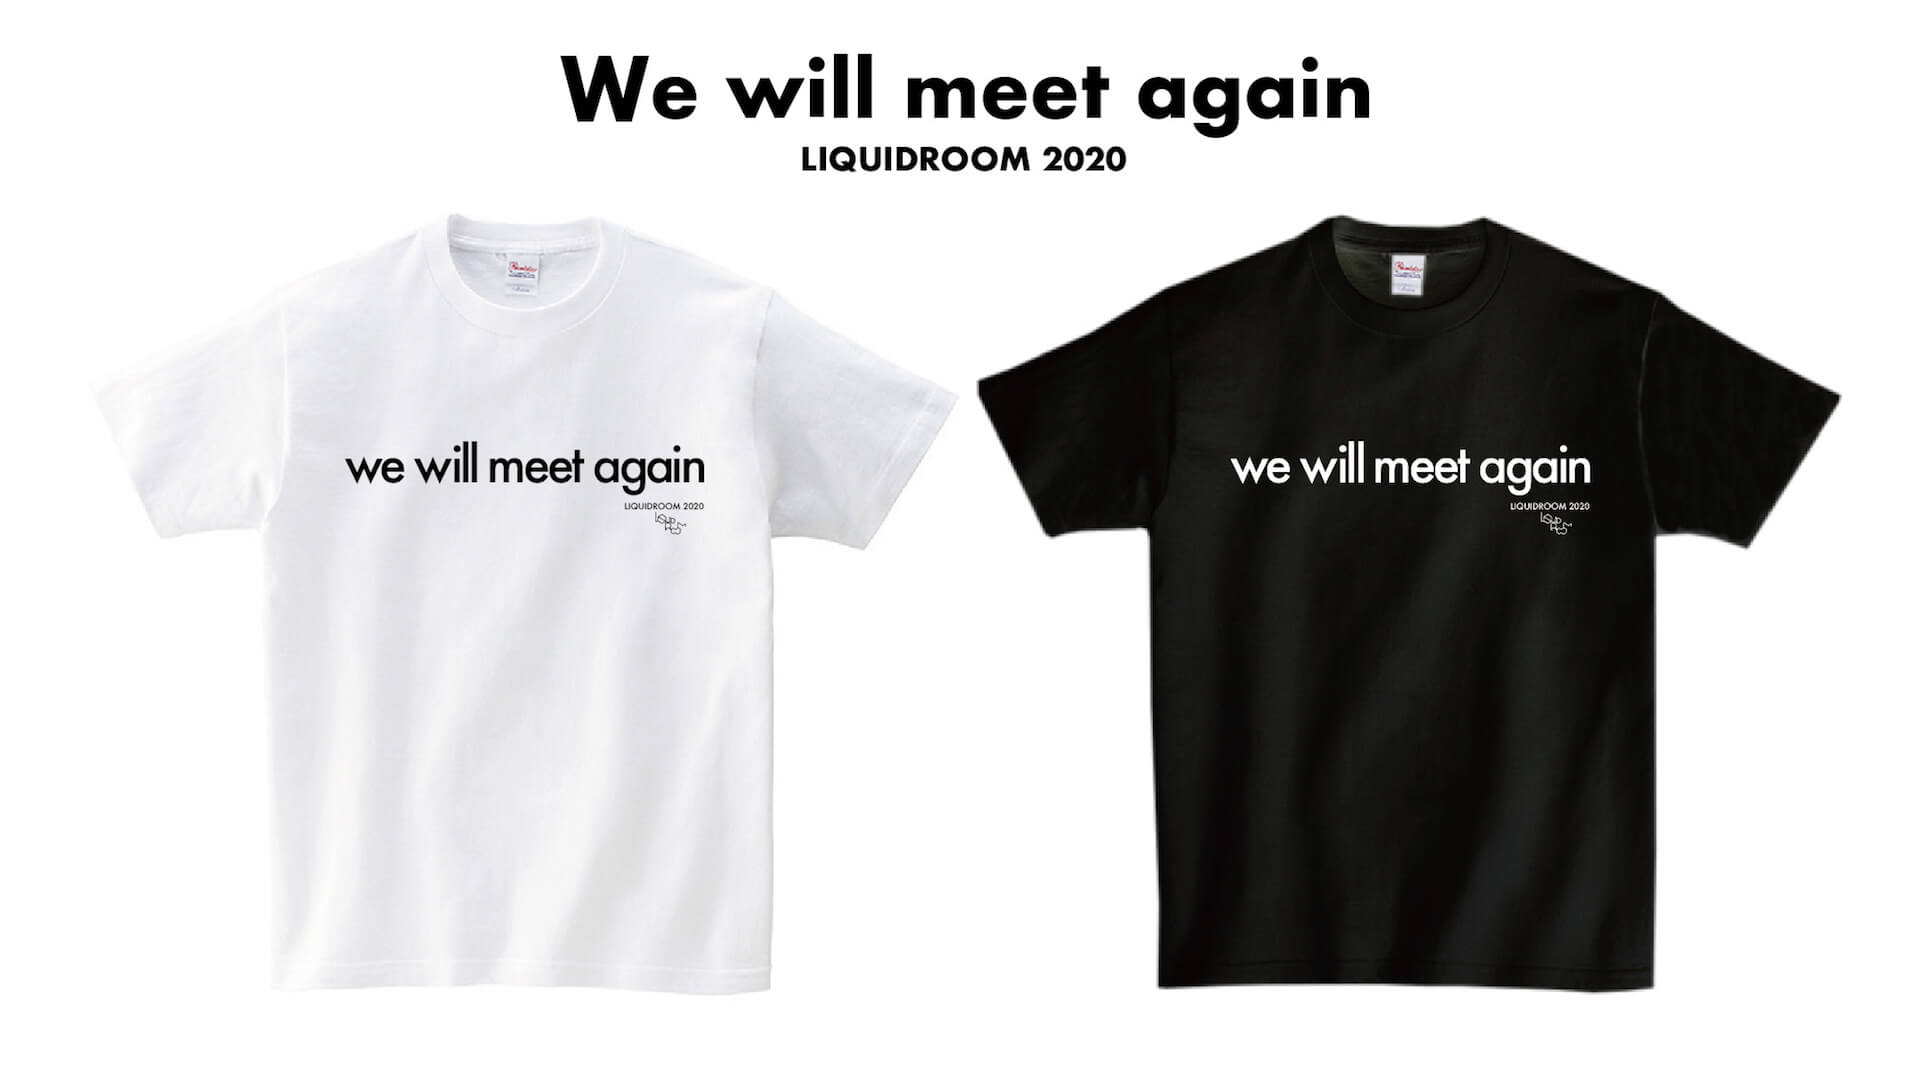 〈We will meet again〉──LIQUIDROOMが電気グルーヴ、坂本慎太郎とのコラボTシャツを受注販売開始 music200501-liquidroom-3